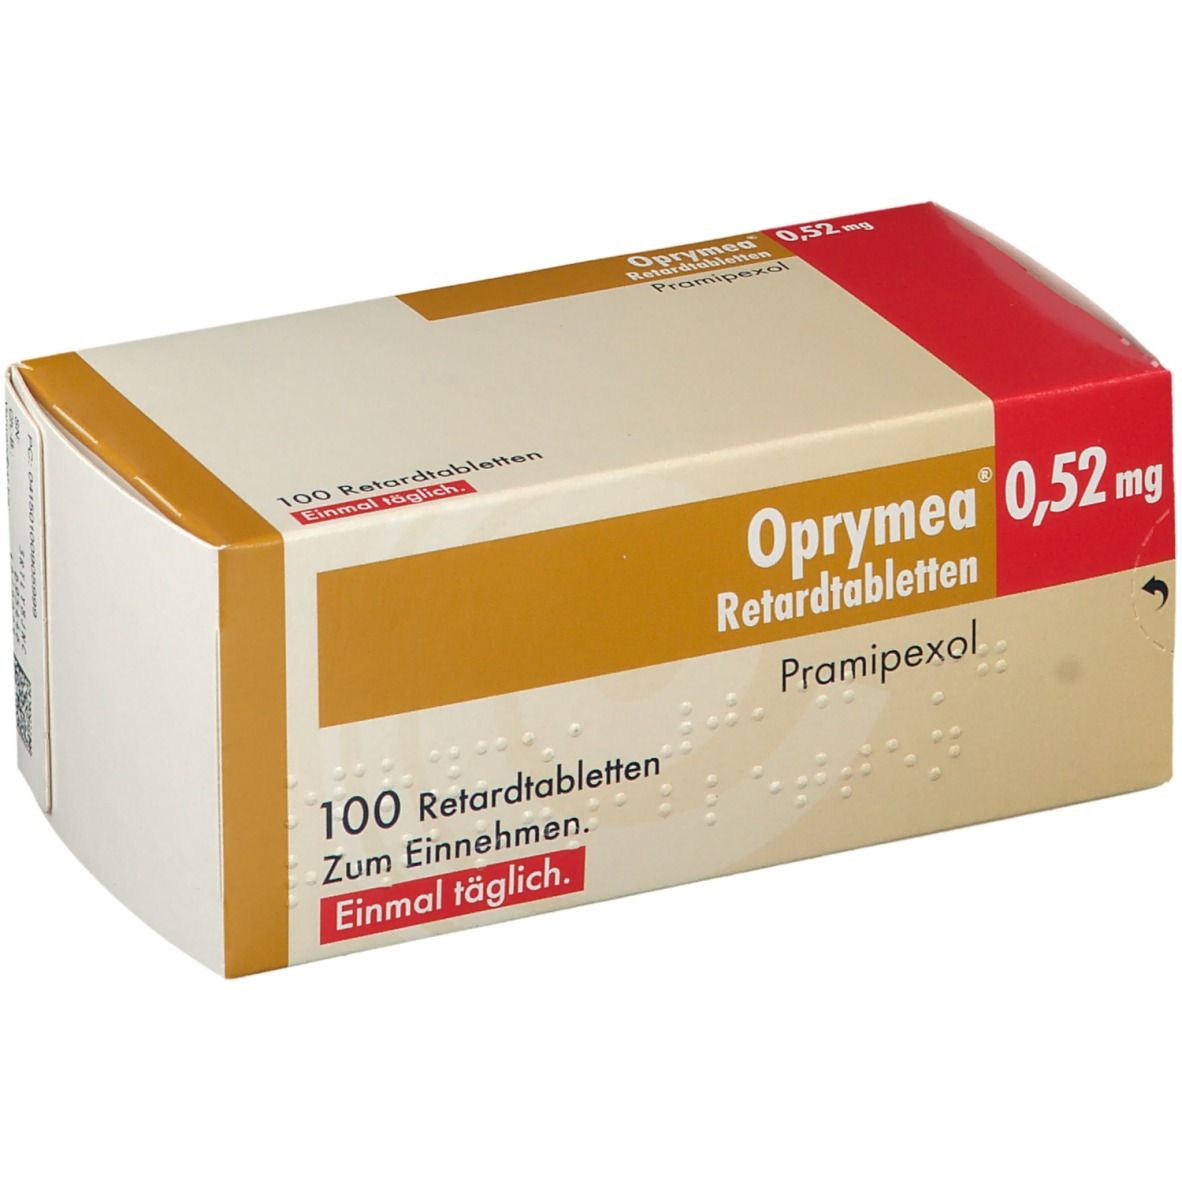 Oprymea® 0,52 mg